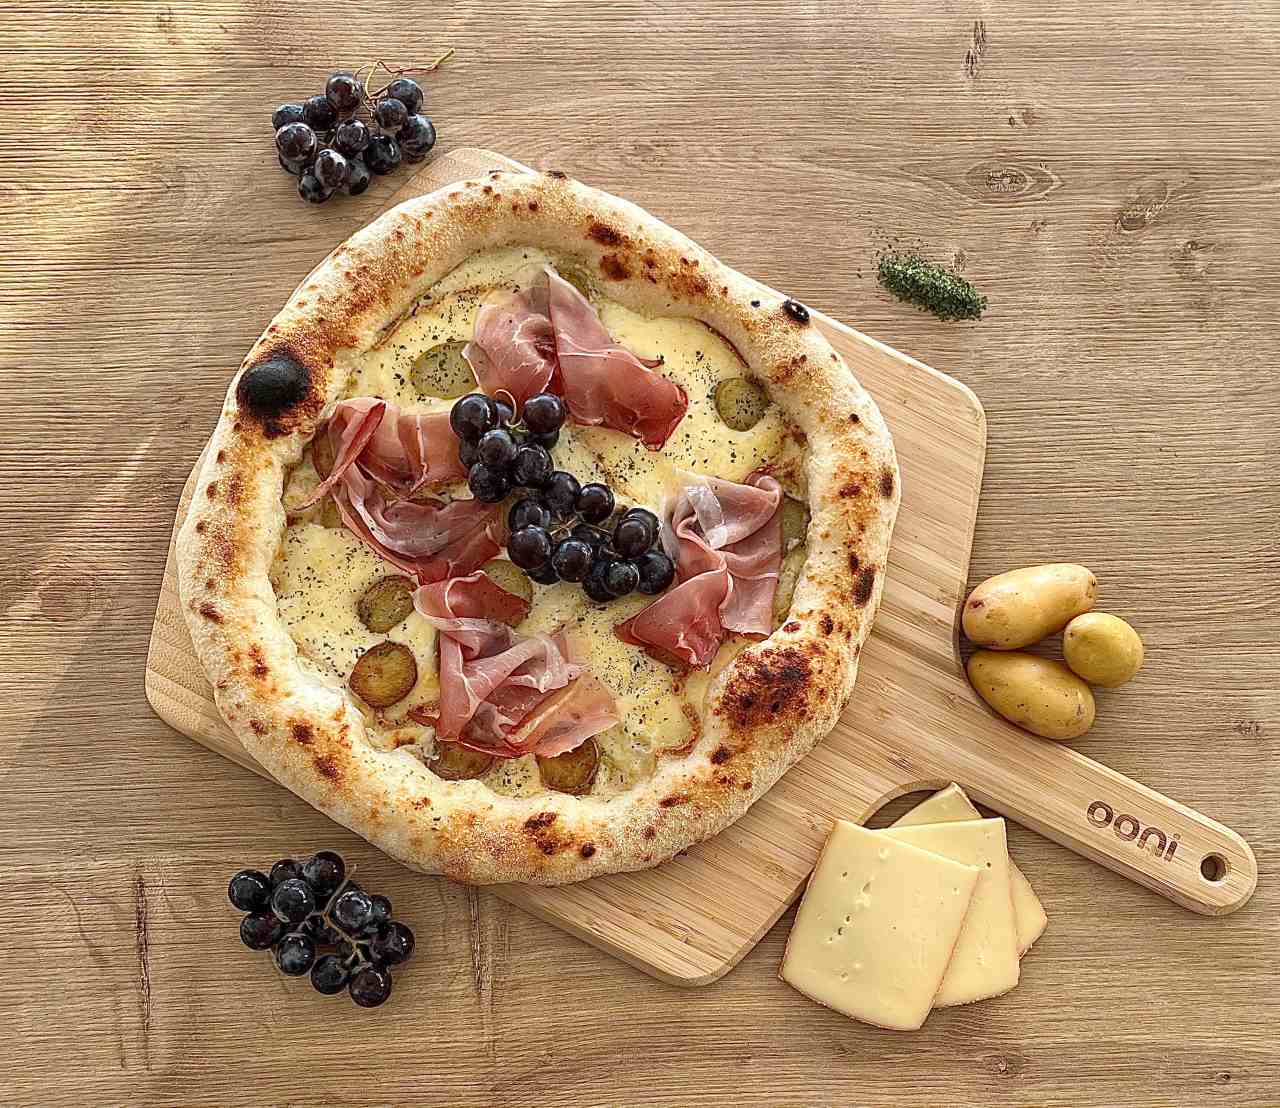 Pizza con formaggio raclette — Ooni IT